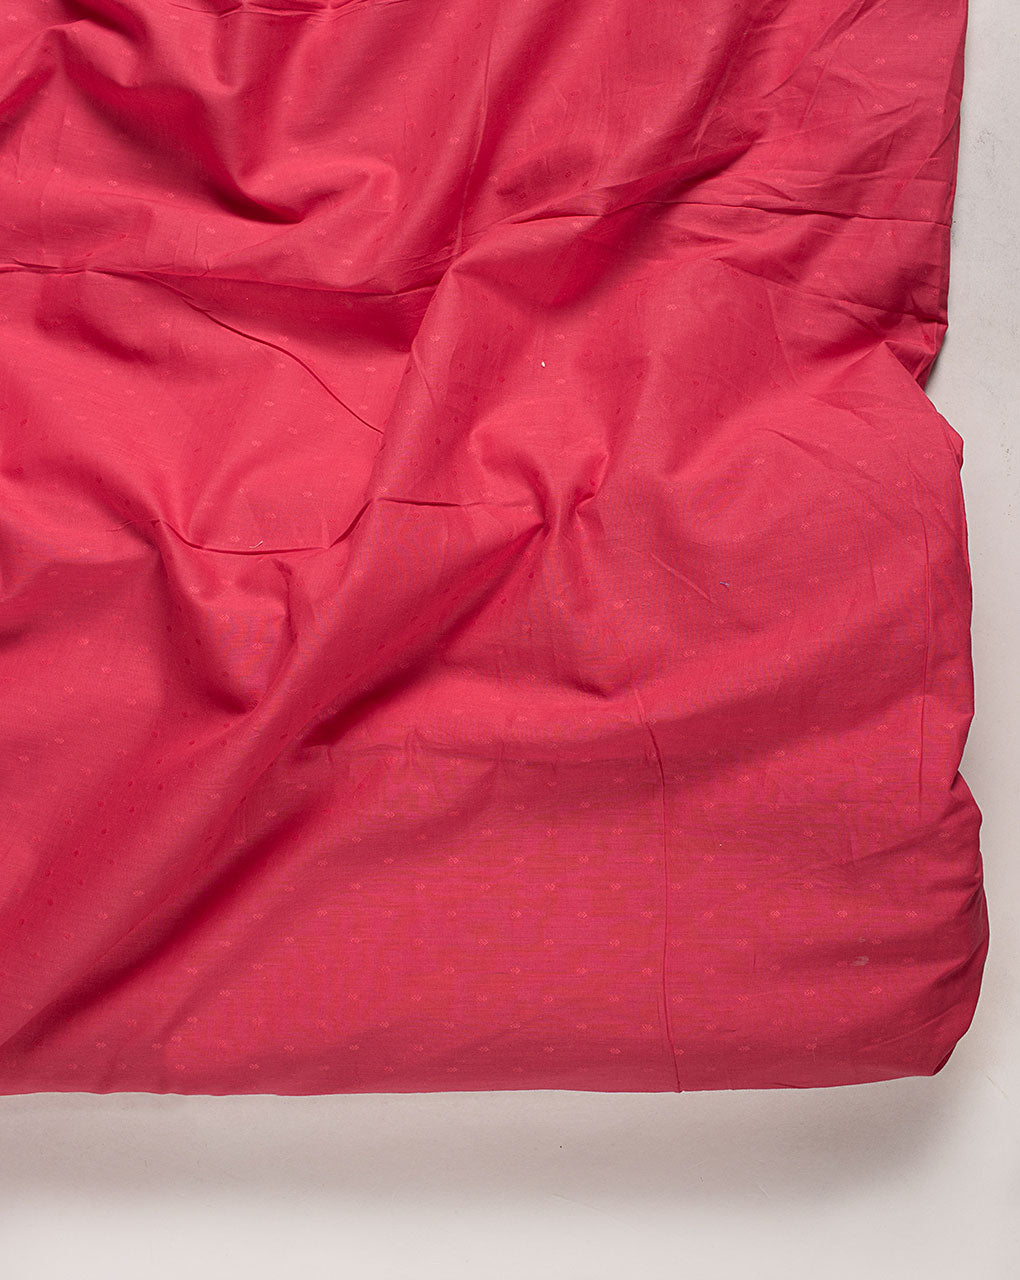 Red Jacquard Cotton Fabric